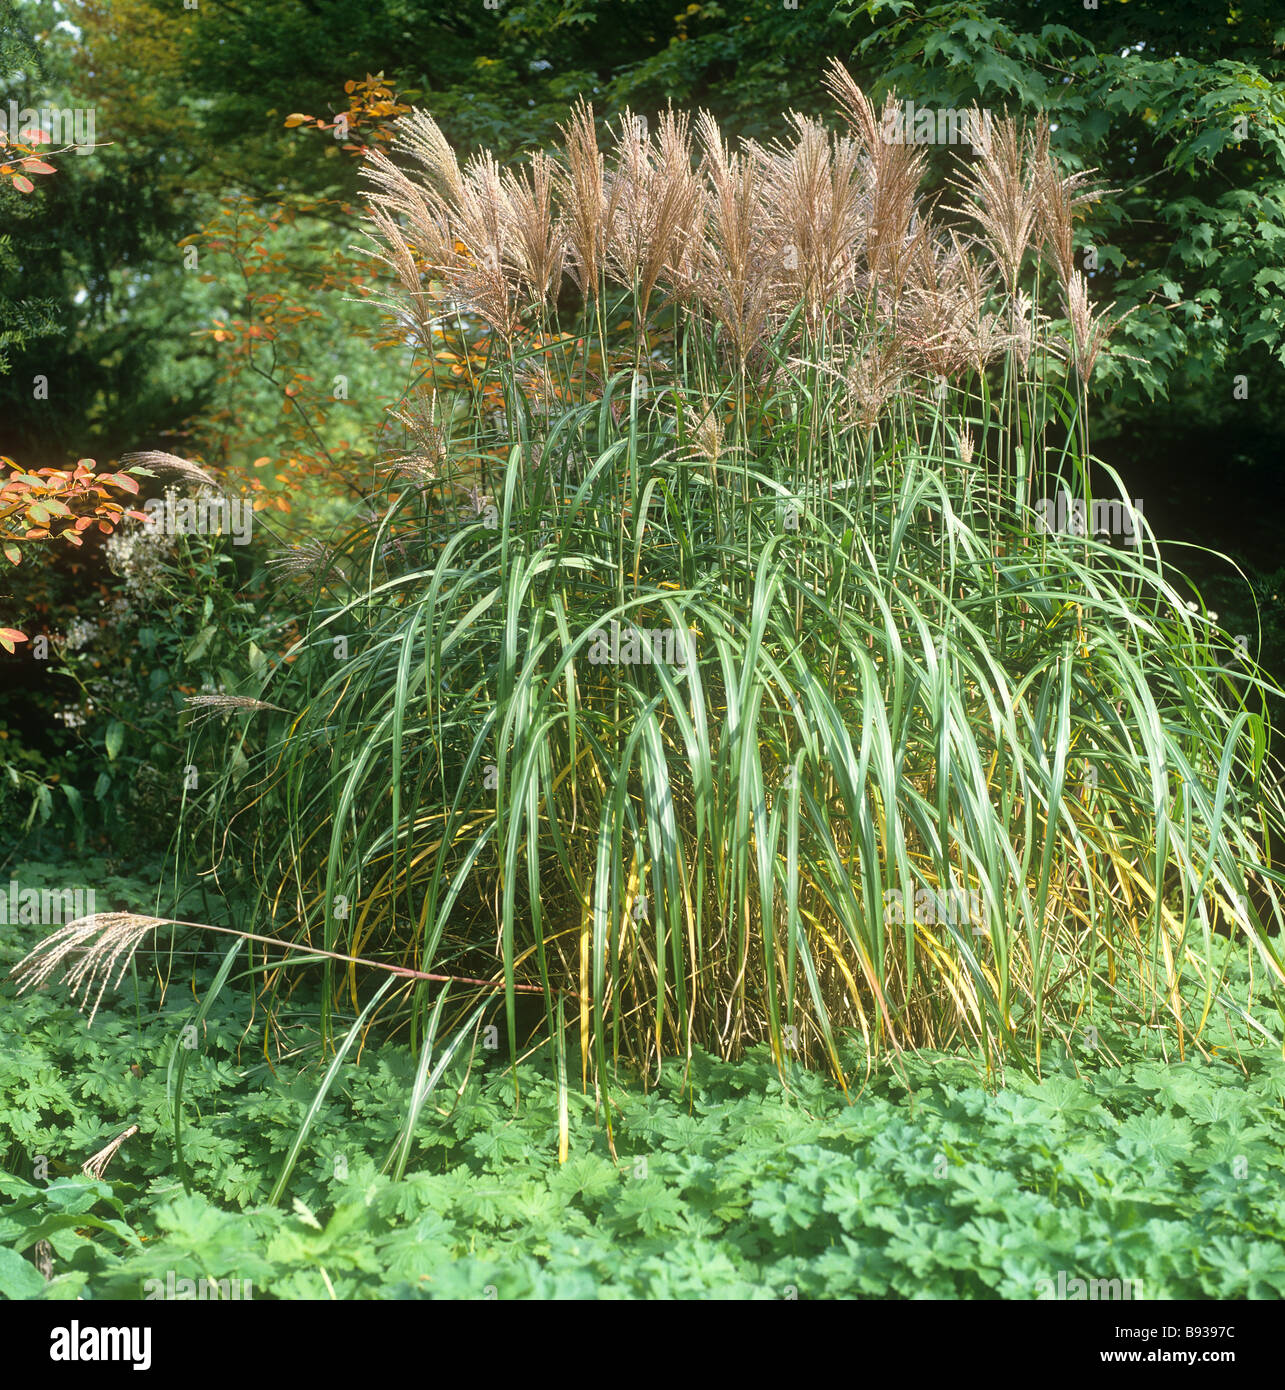 Silver Banner Grass / Miscanthus sacchariflorus Stock Photo